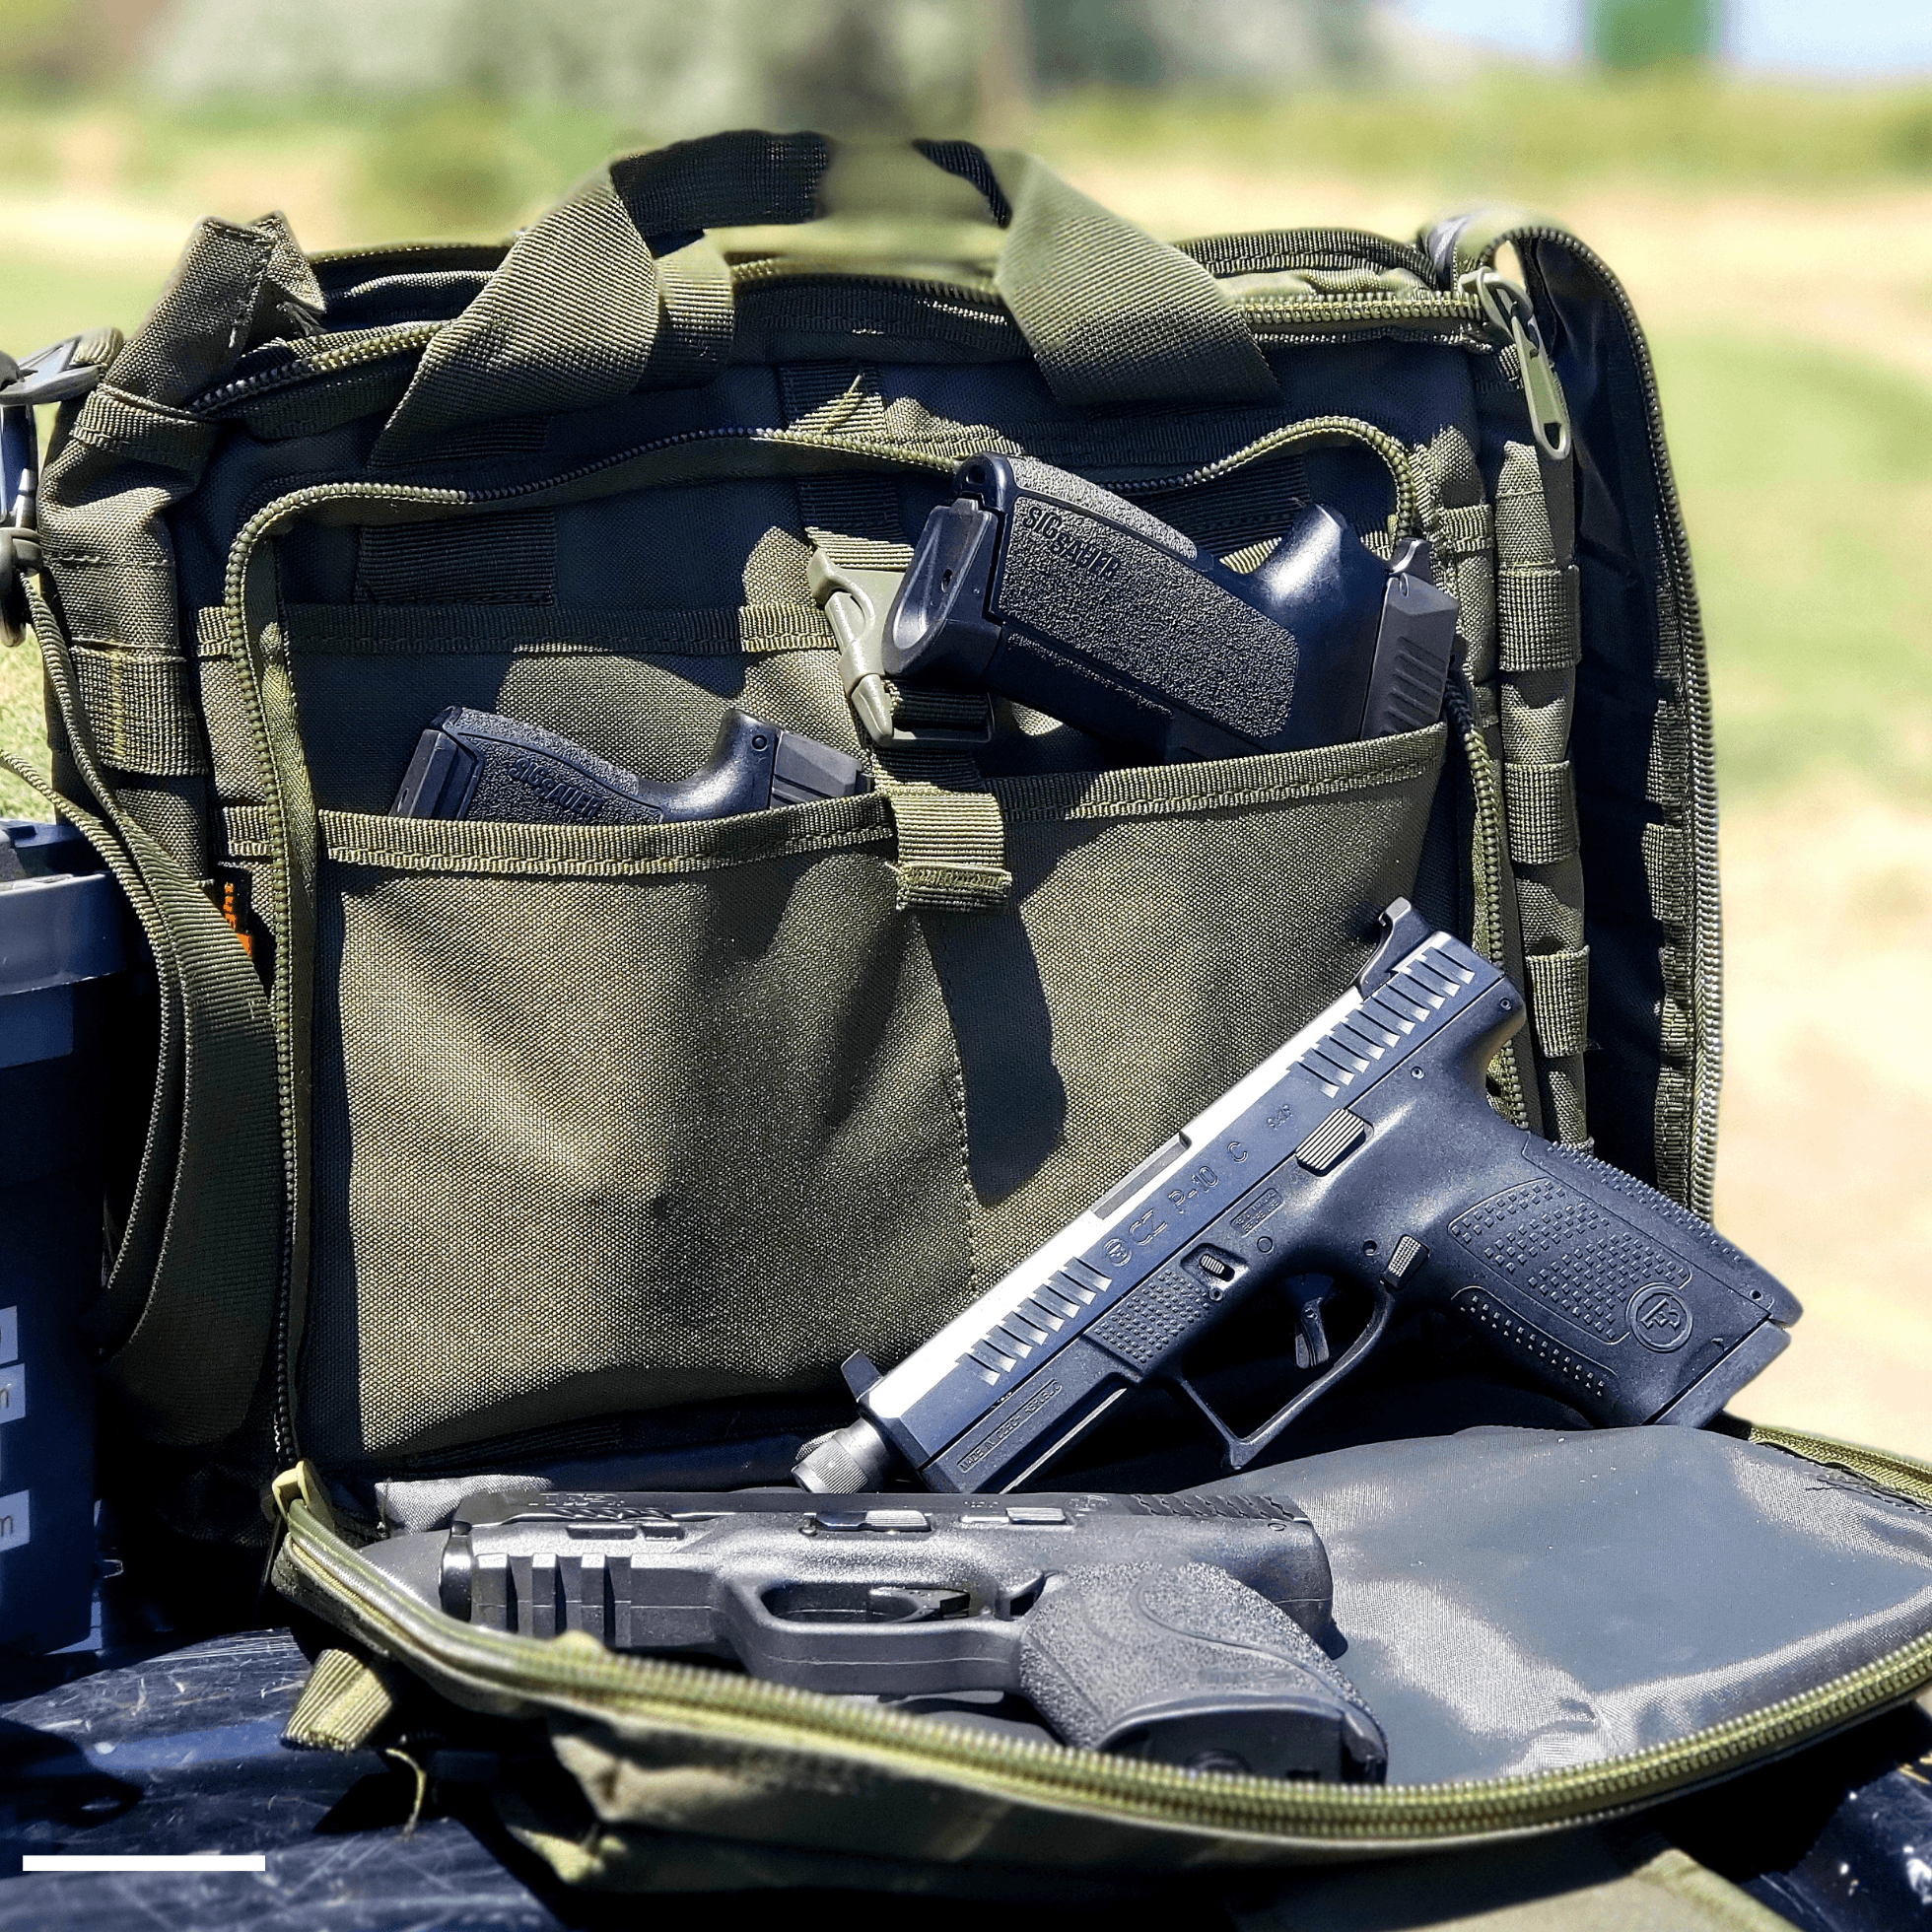 Why you Should Have a Good Range Bag